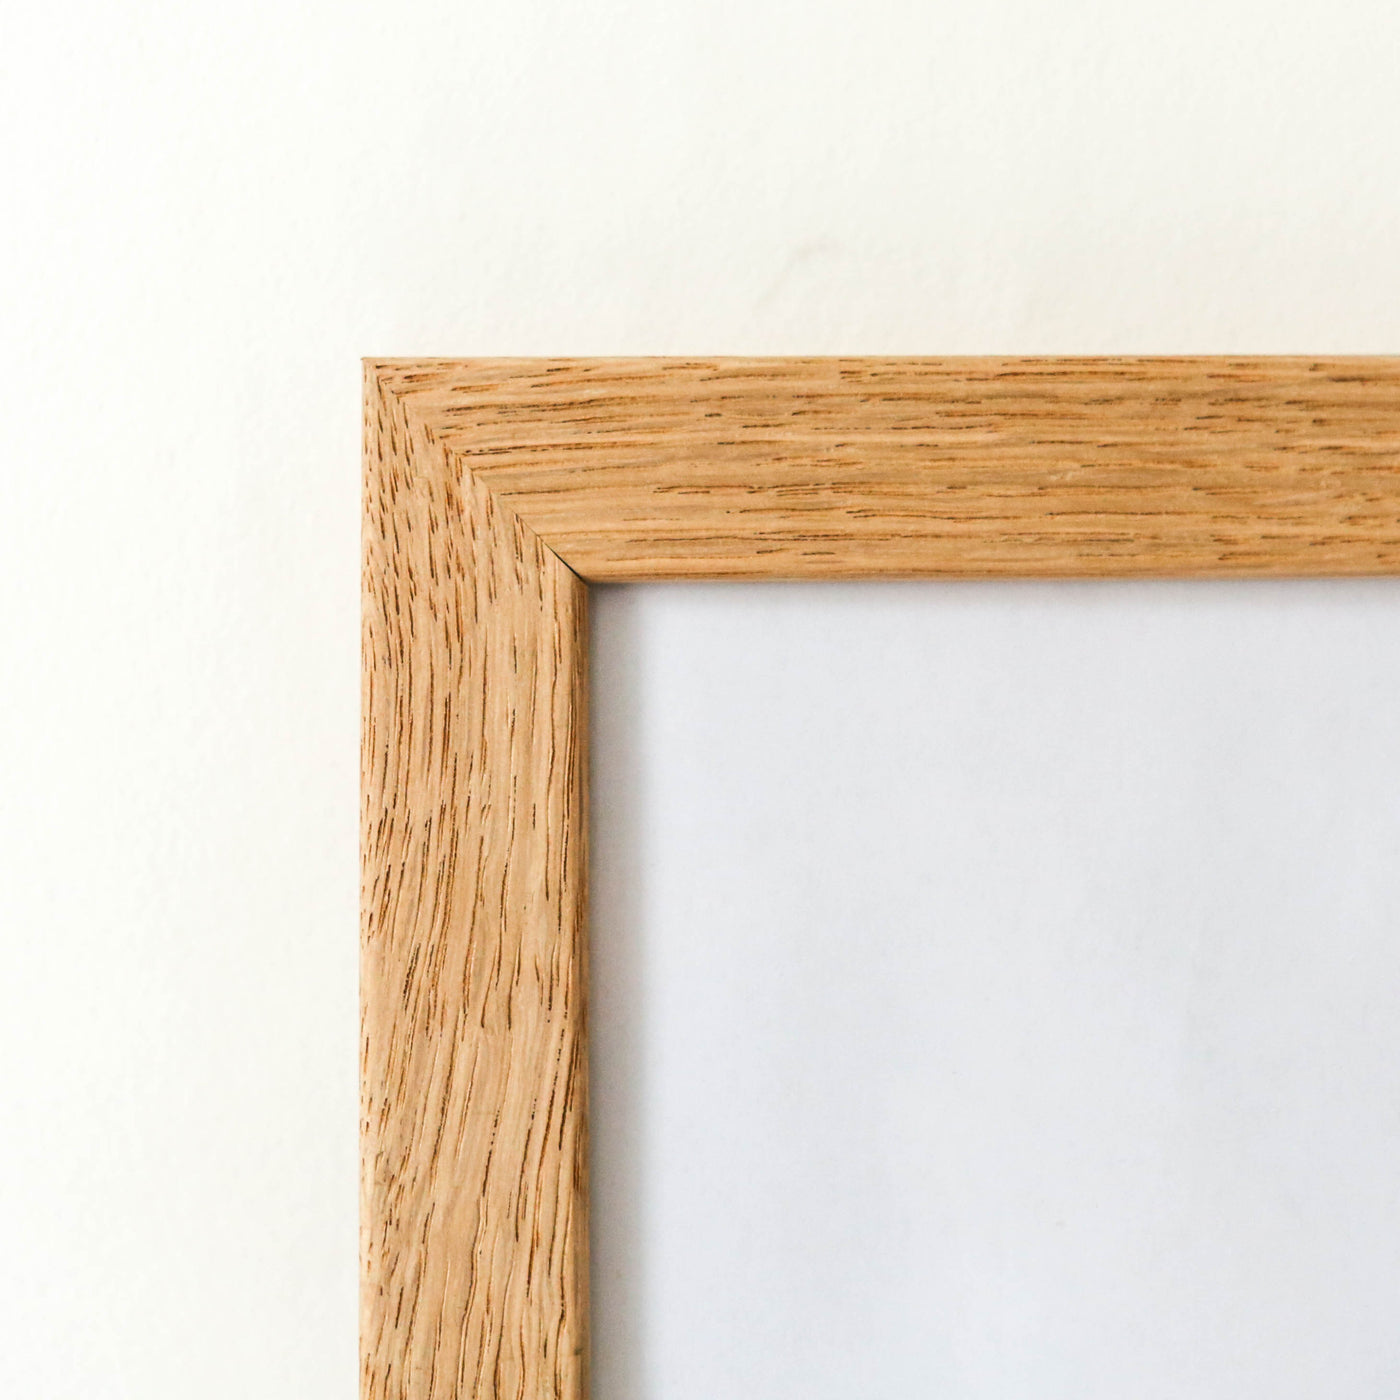 Solid Oak Wood Frame - A3